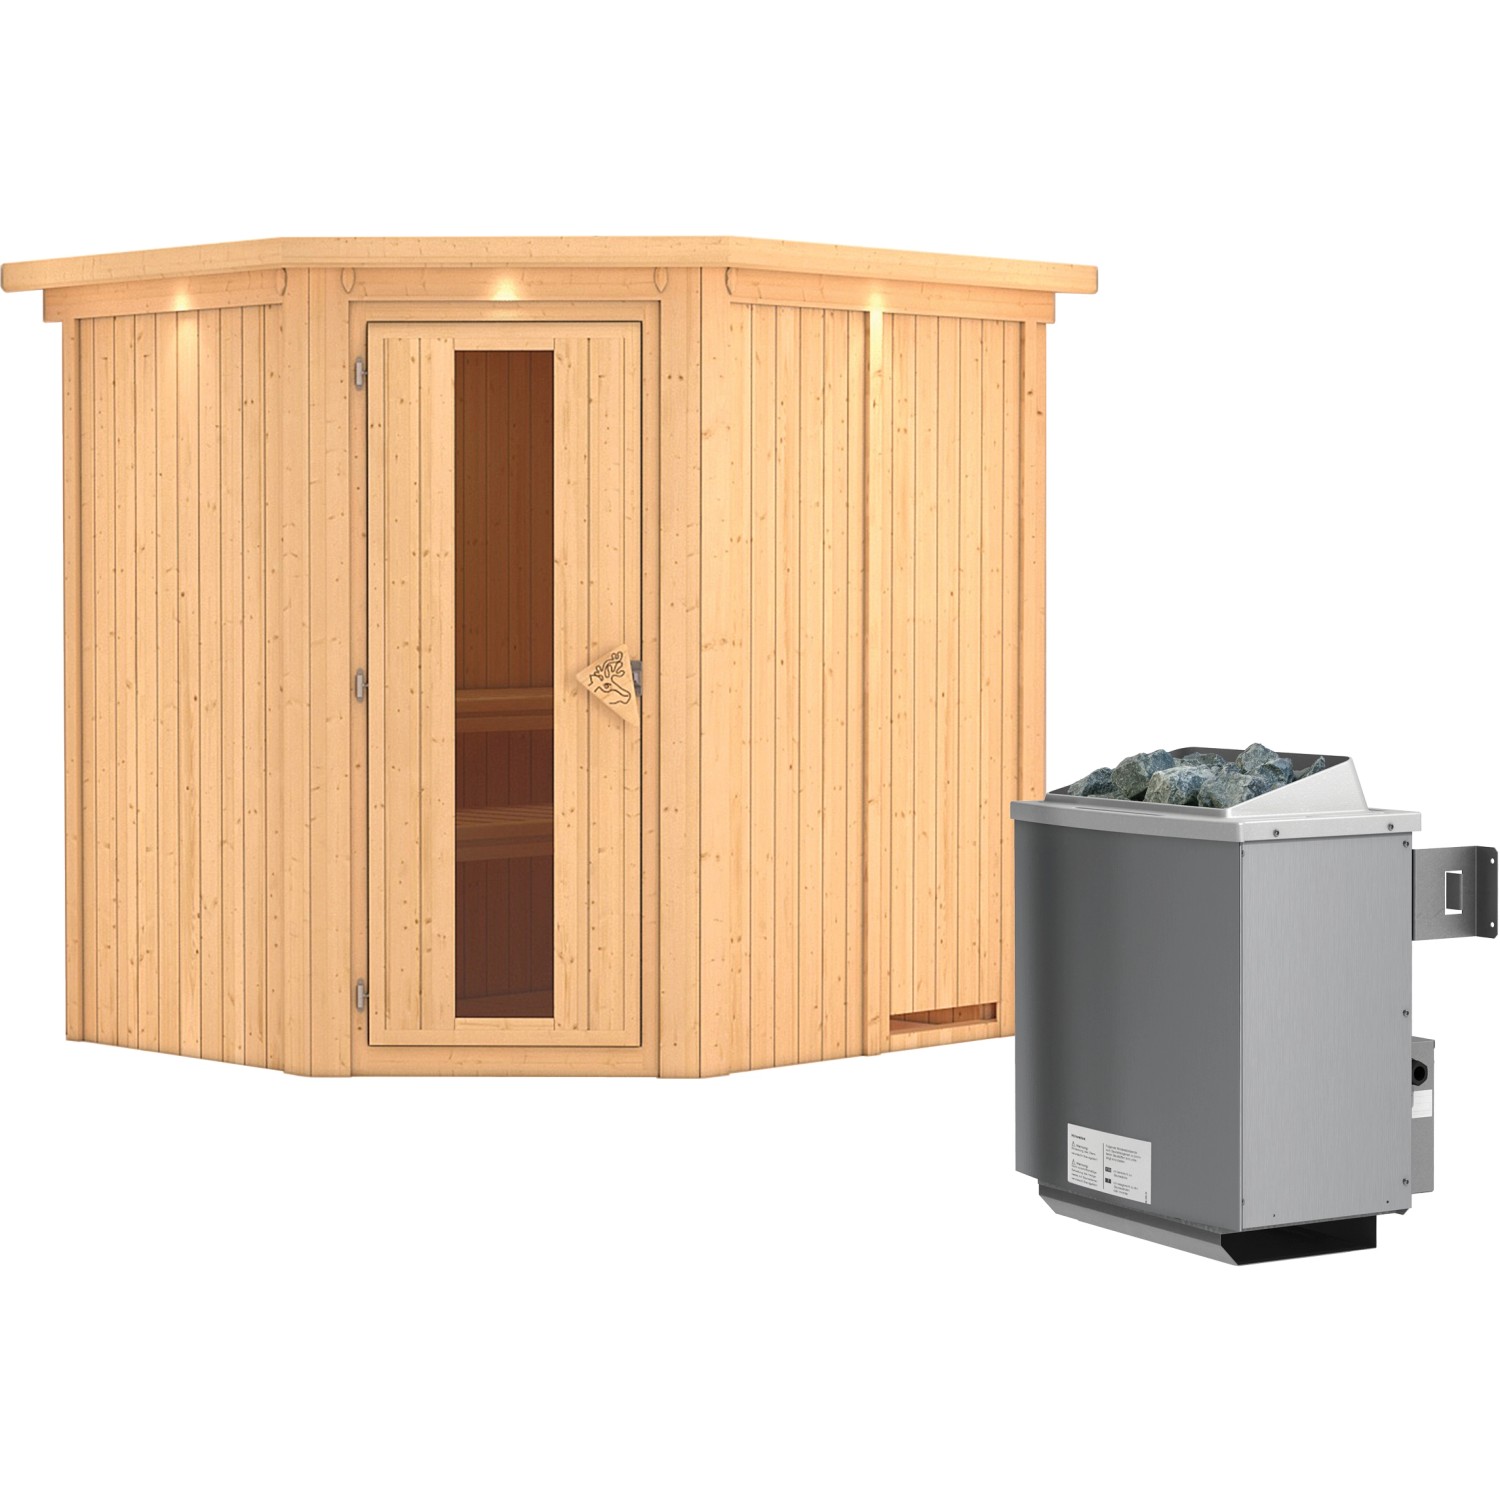 Karibu Sauna Swenna inkl. Ofen 9 kW m. integr. Strg., Dachkranz, Energiespa günstig online kaufen